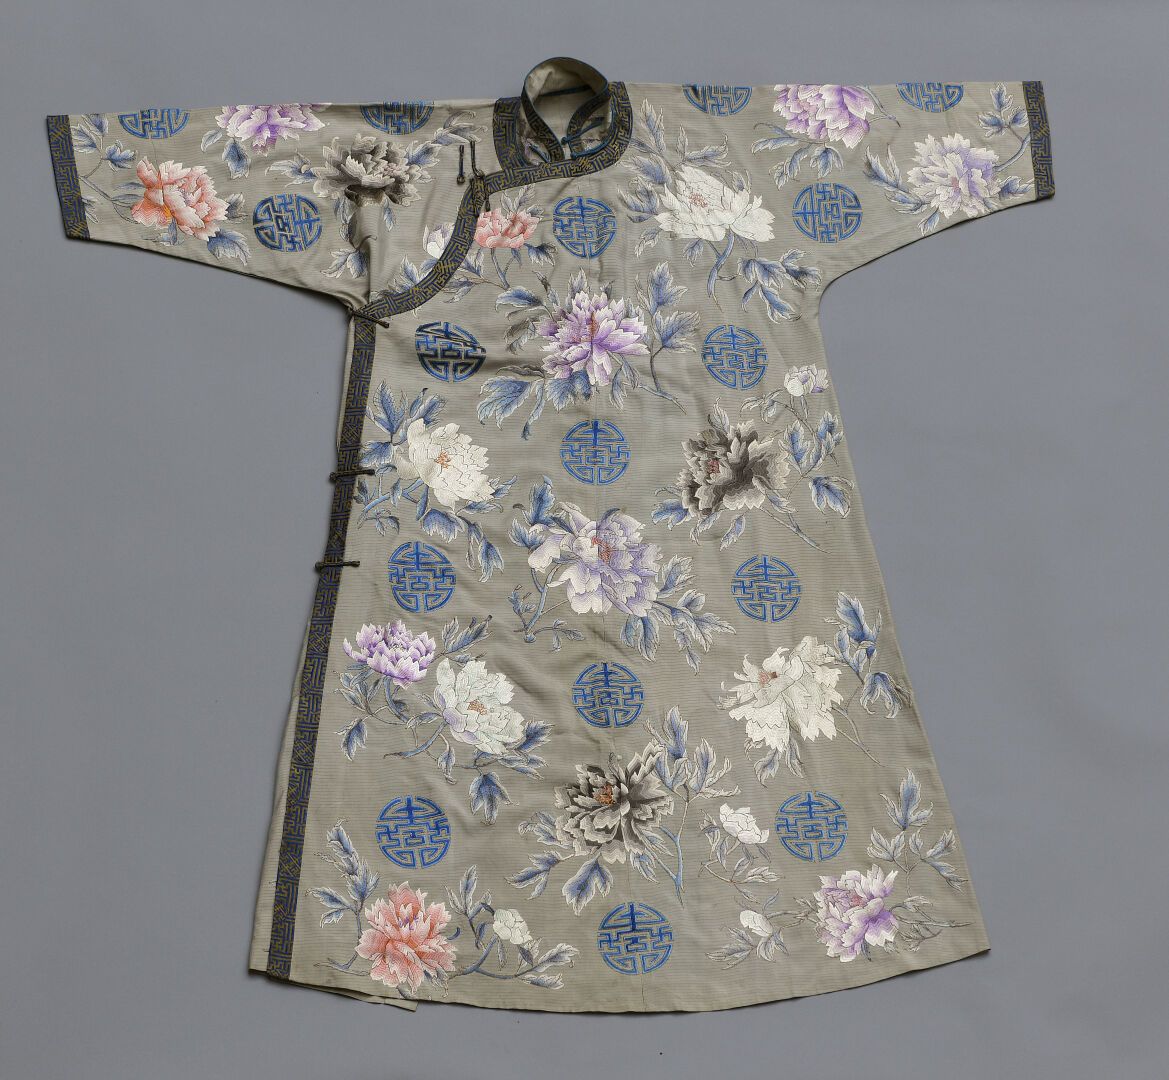 Null 丝绸大衣，用丝线刺绣
中国，约1900年
满族风格，浅蓝色背景上有多色花纹装饰。状况良好。
135 x 134 cm

参考资料：罗伯特-D-雅各布森&hellip;